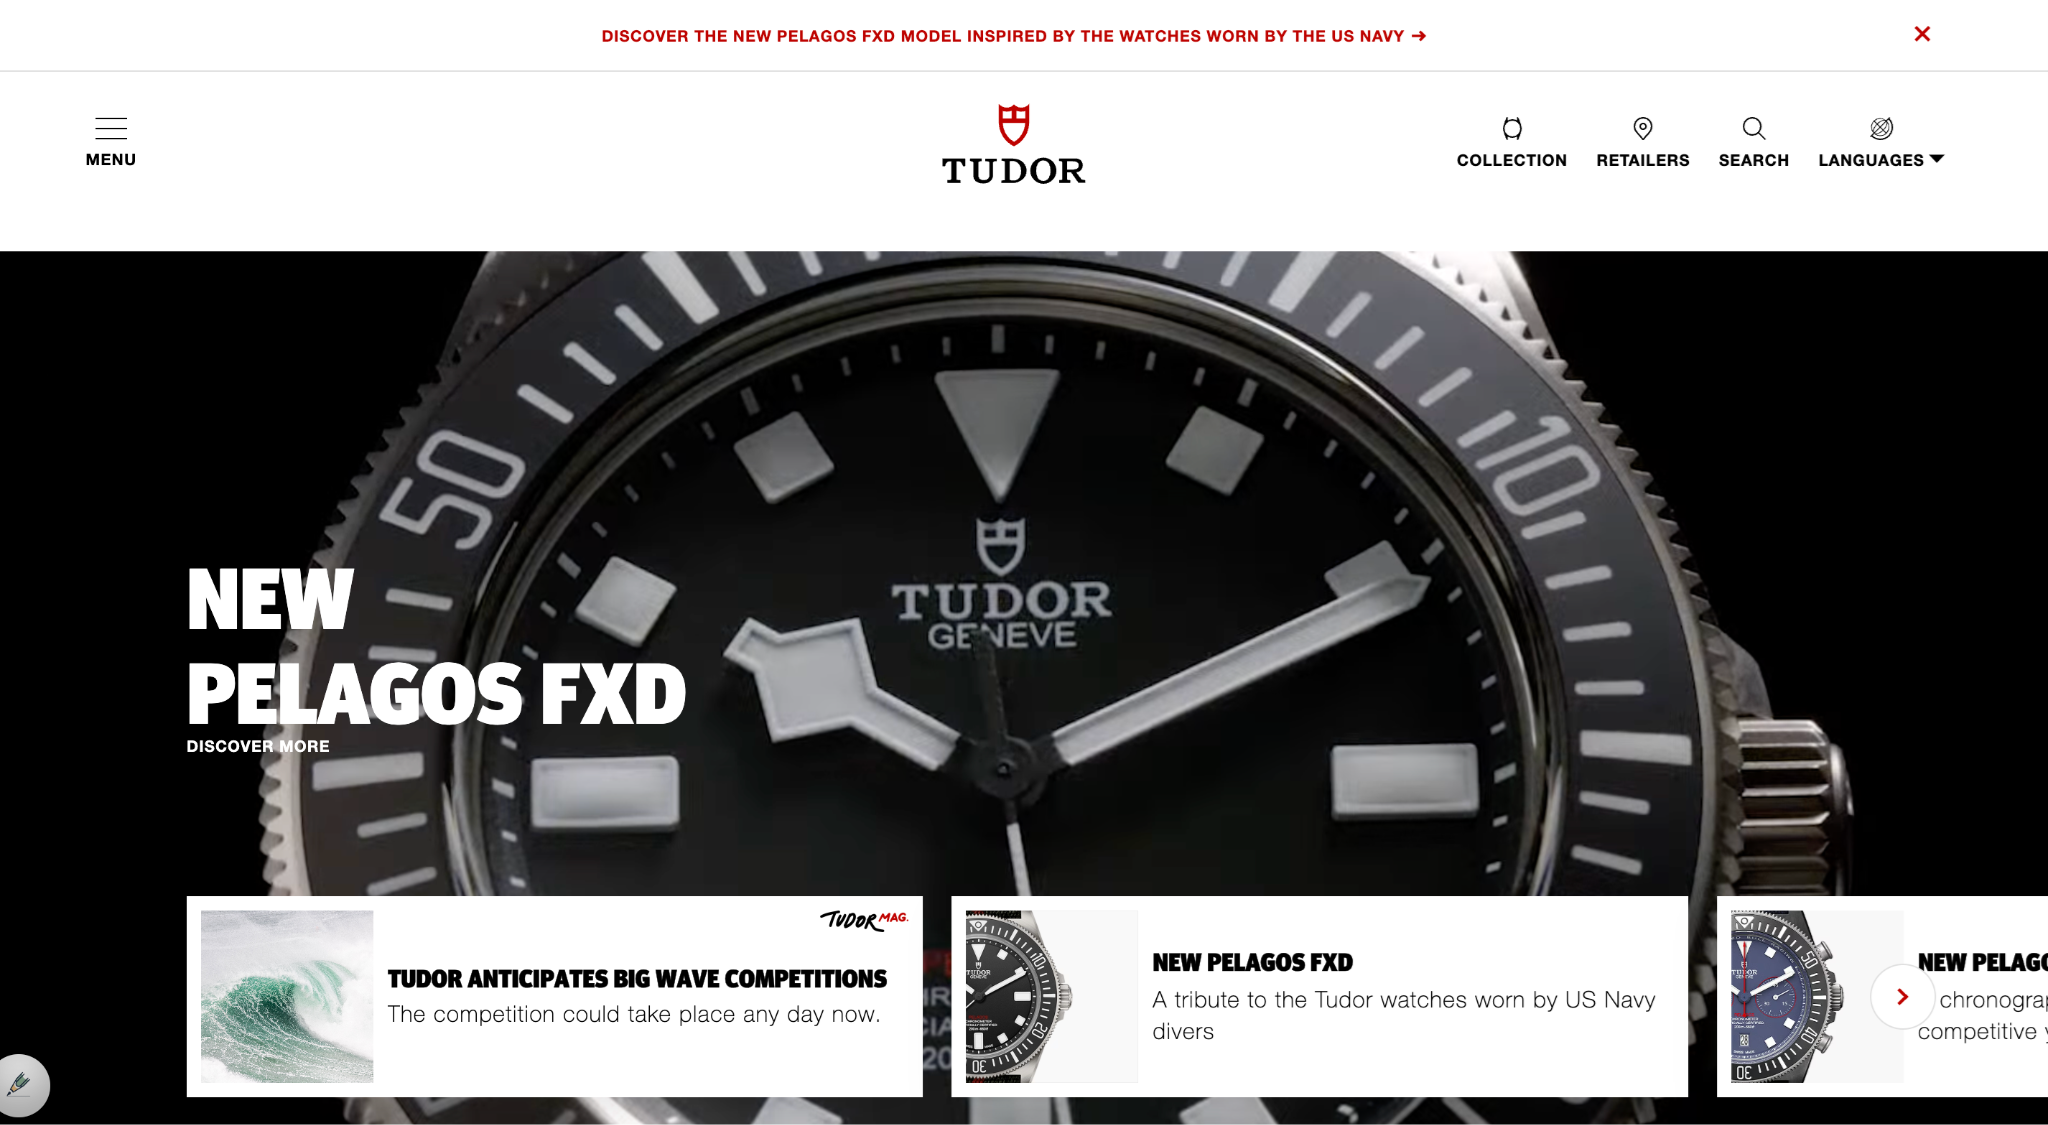 Tudor watche1s